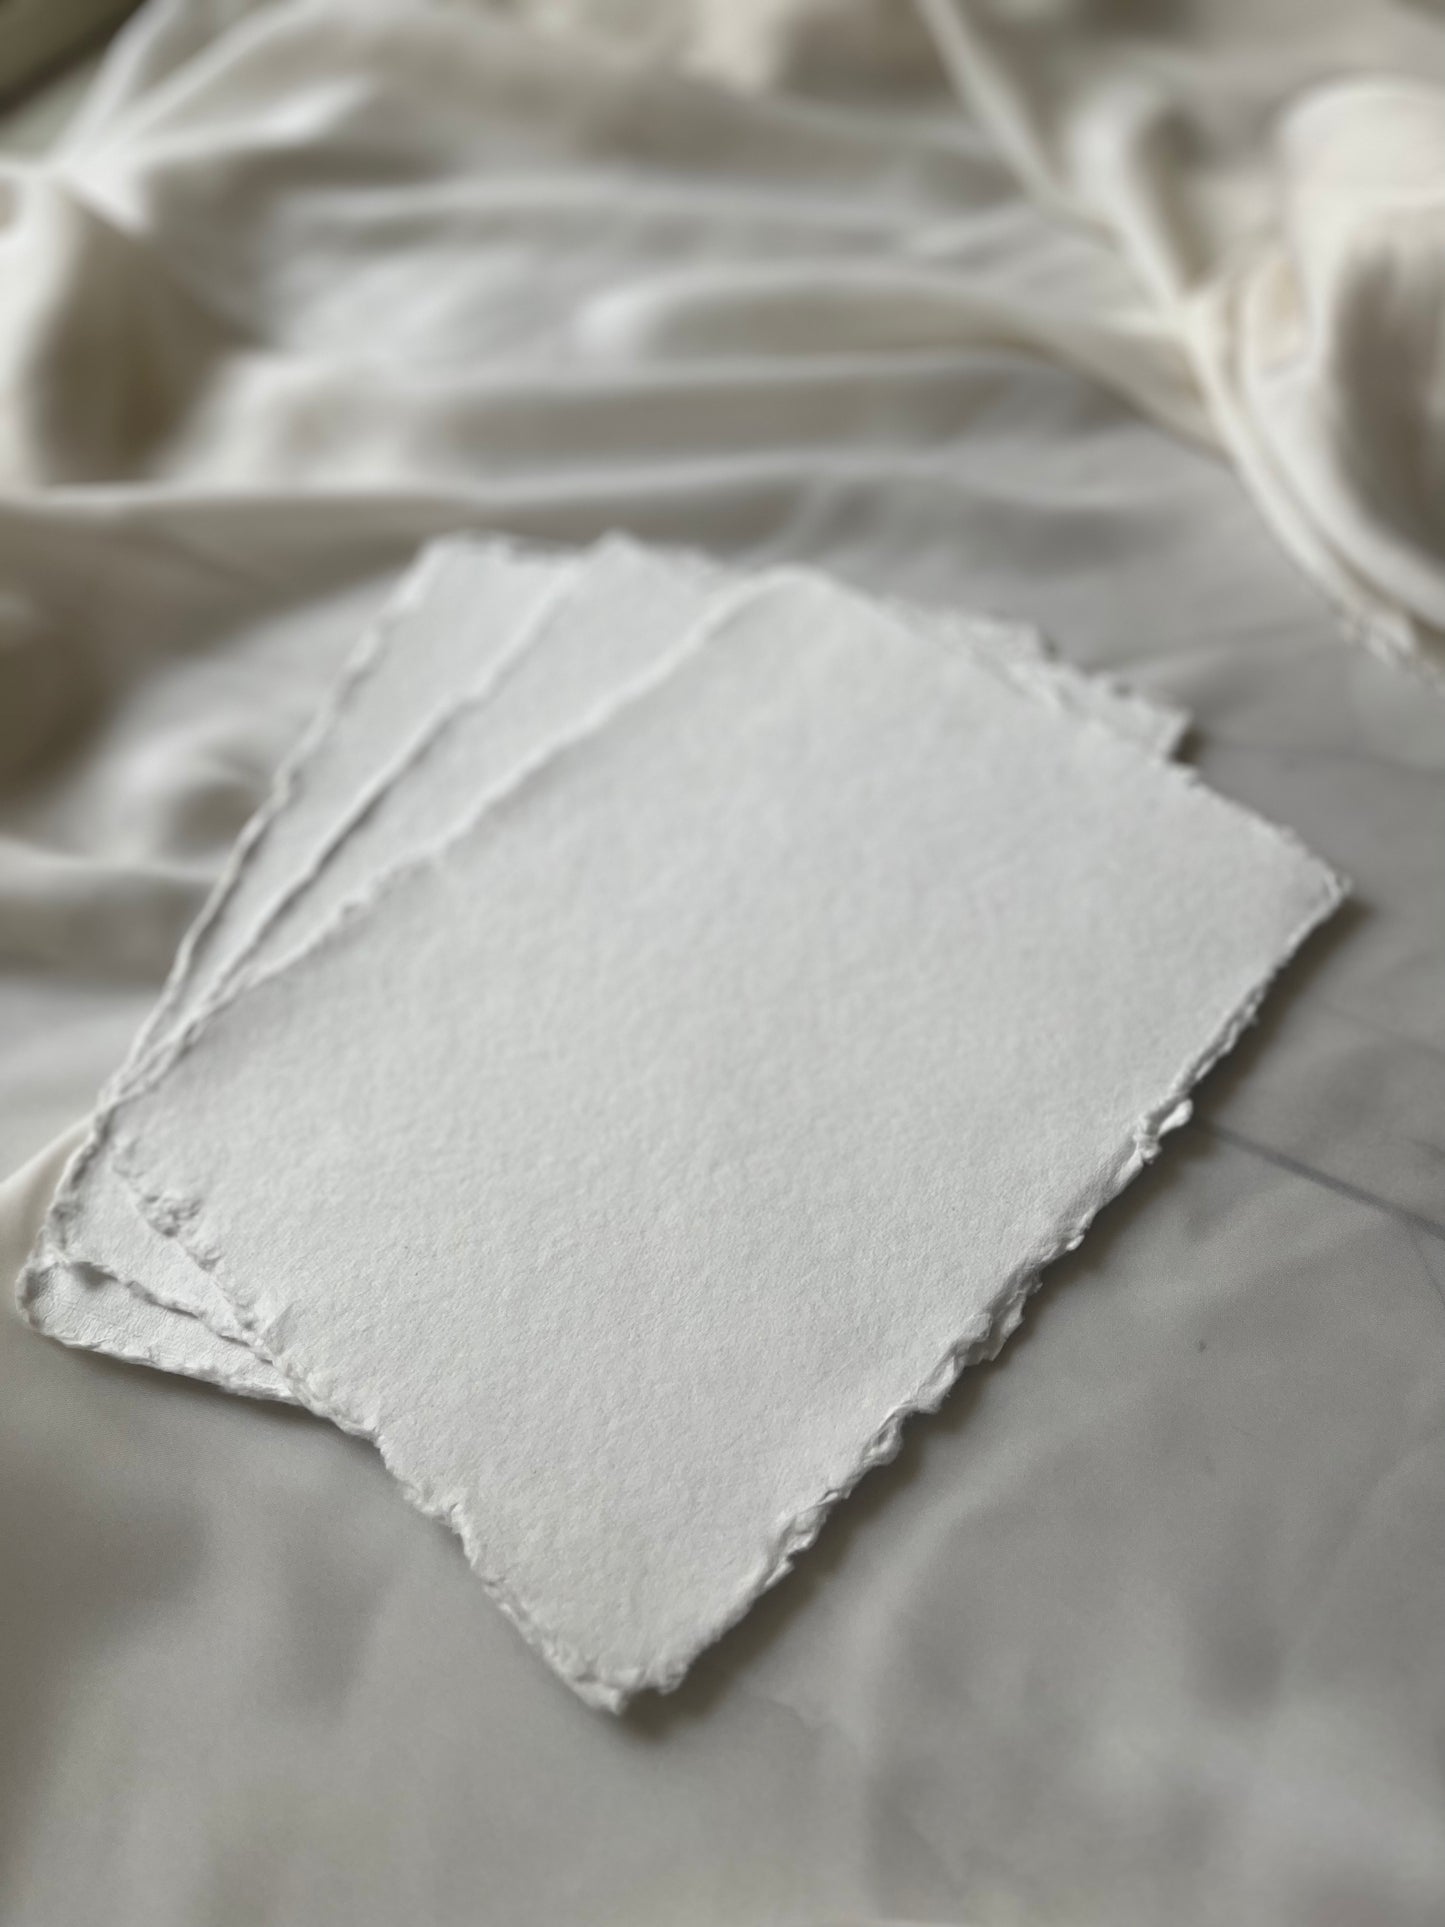 Deckled edge Handmade sheets